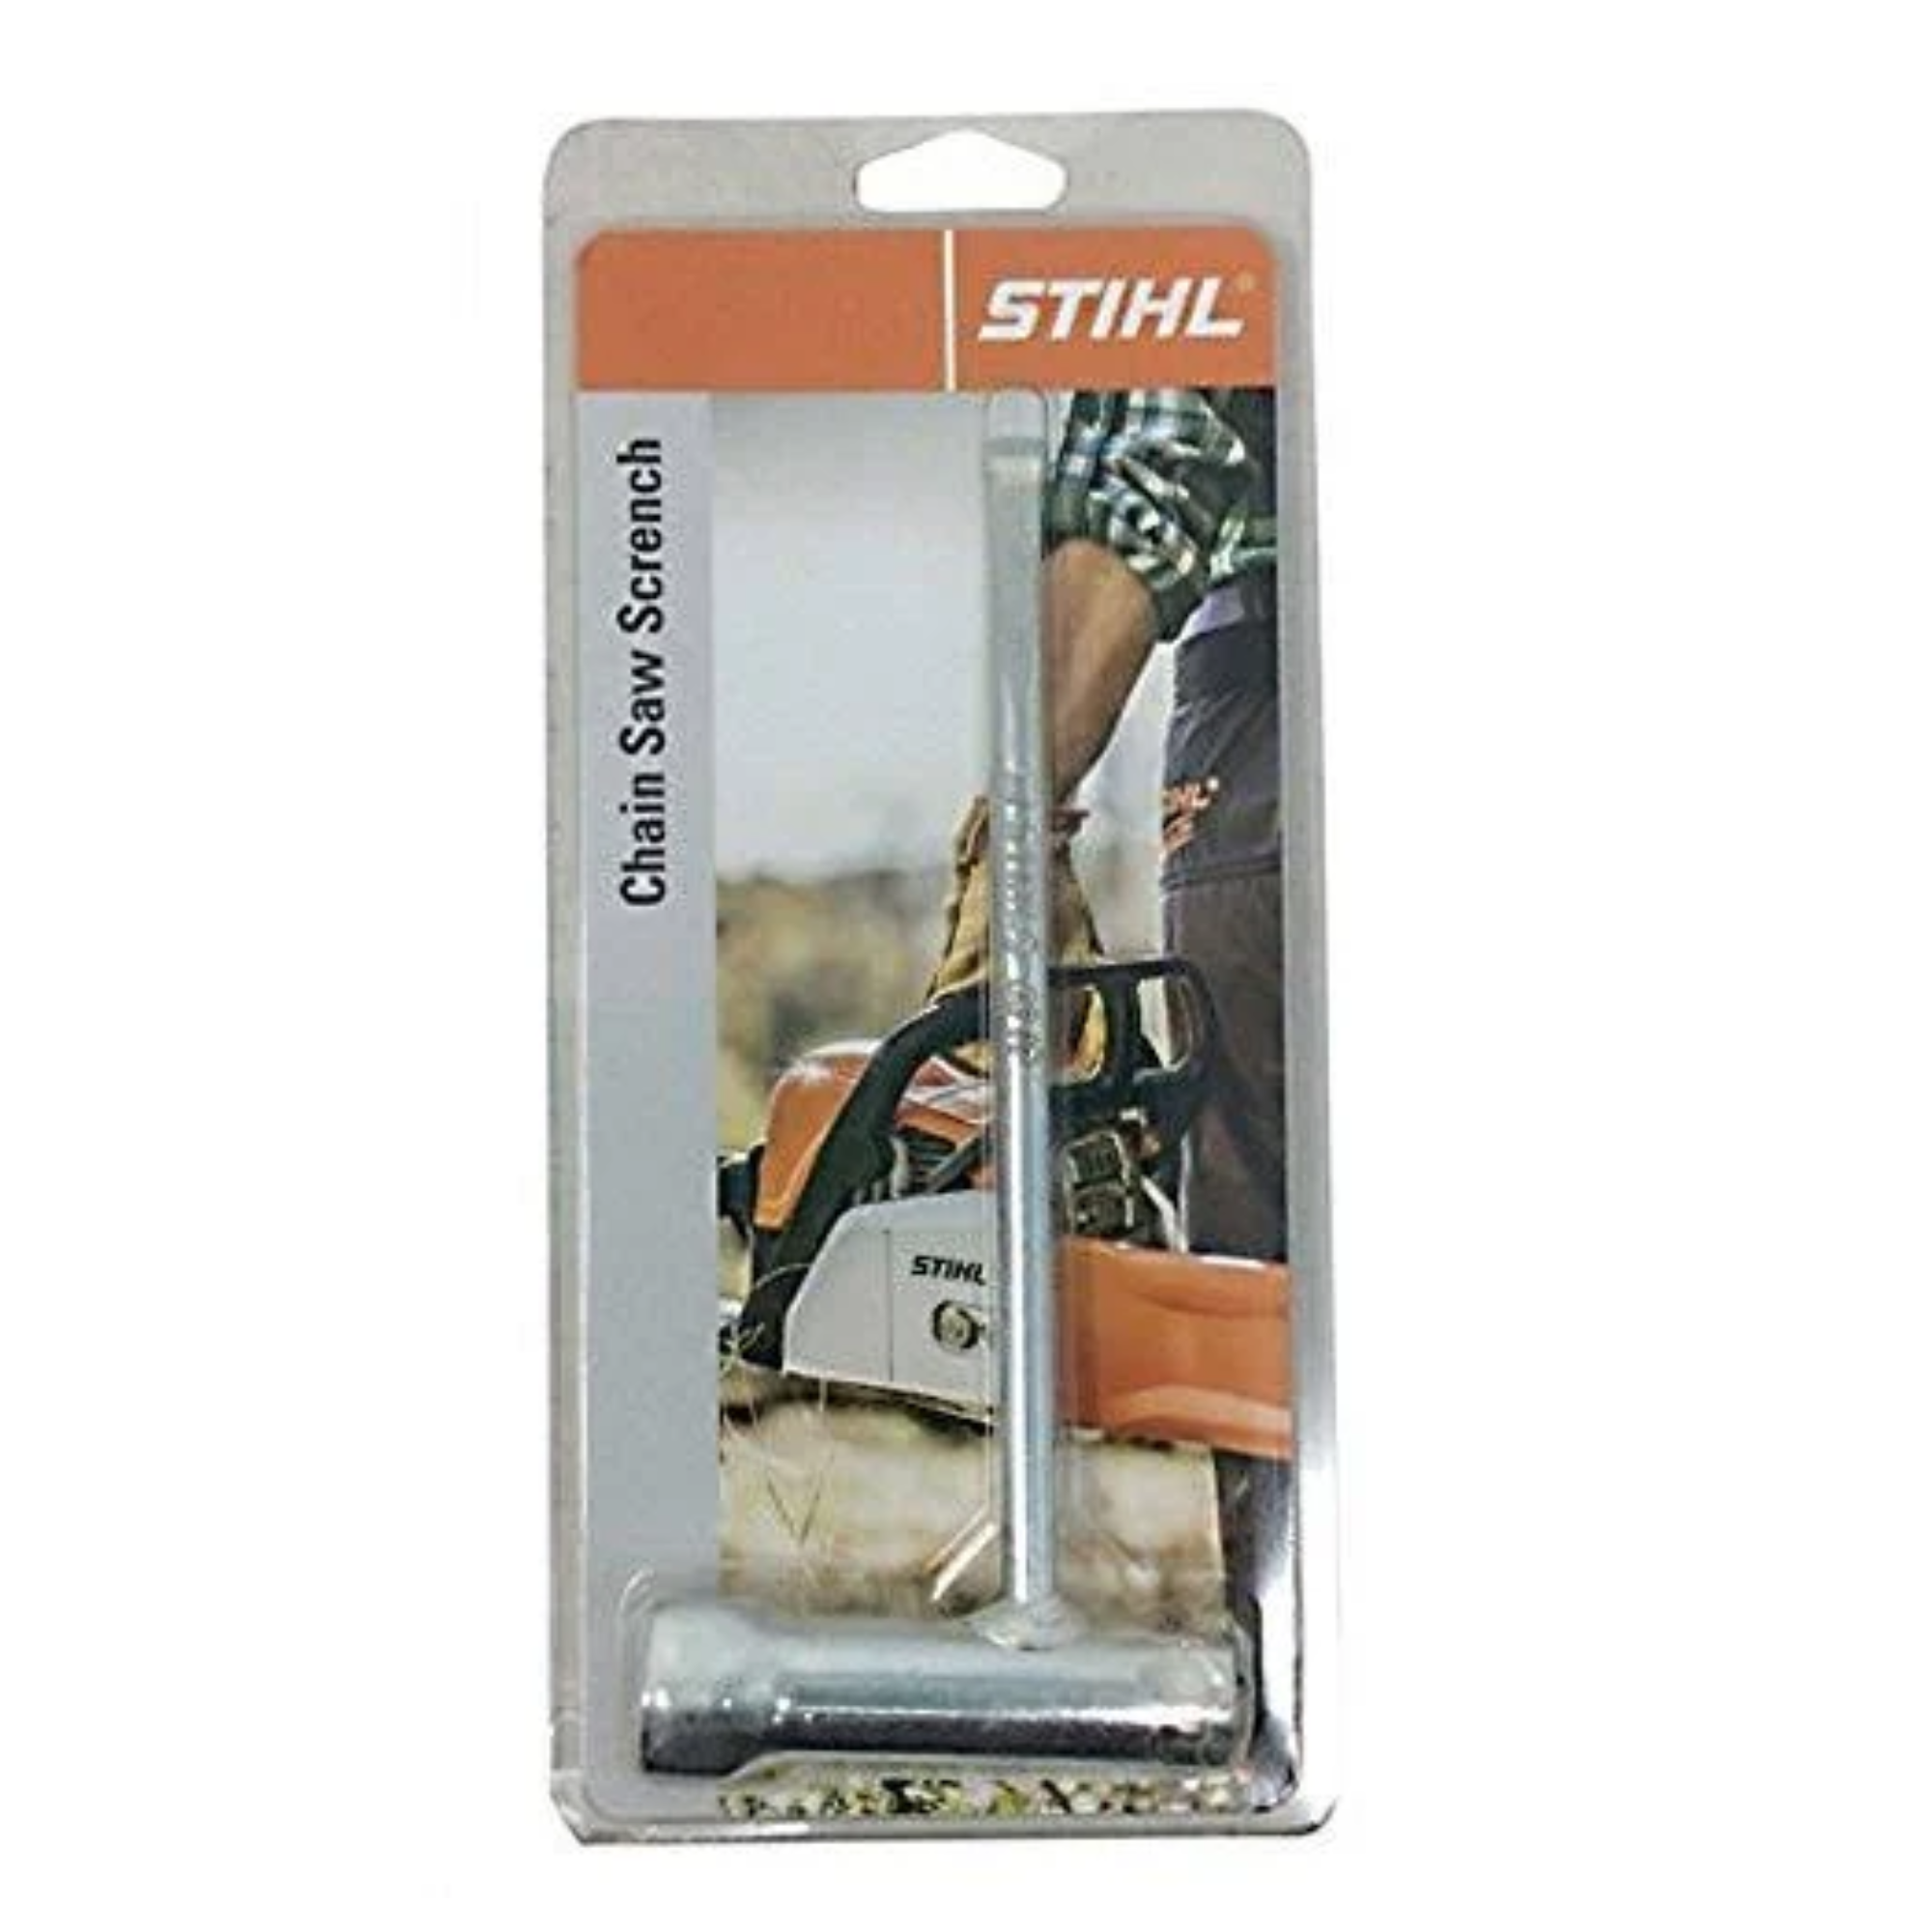 Stihl Chainsaw Scrench Wrench | 7010 871 0389